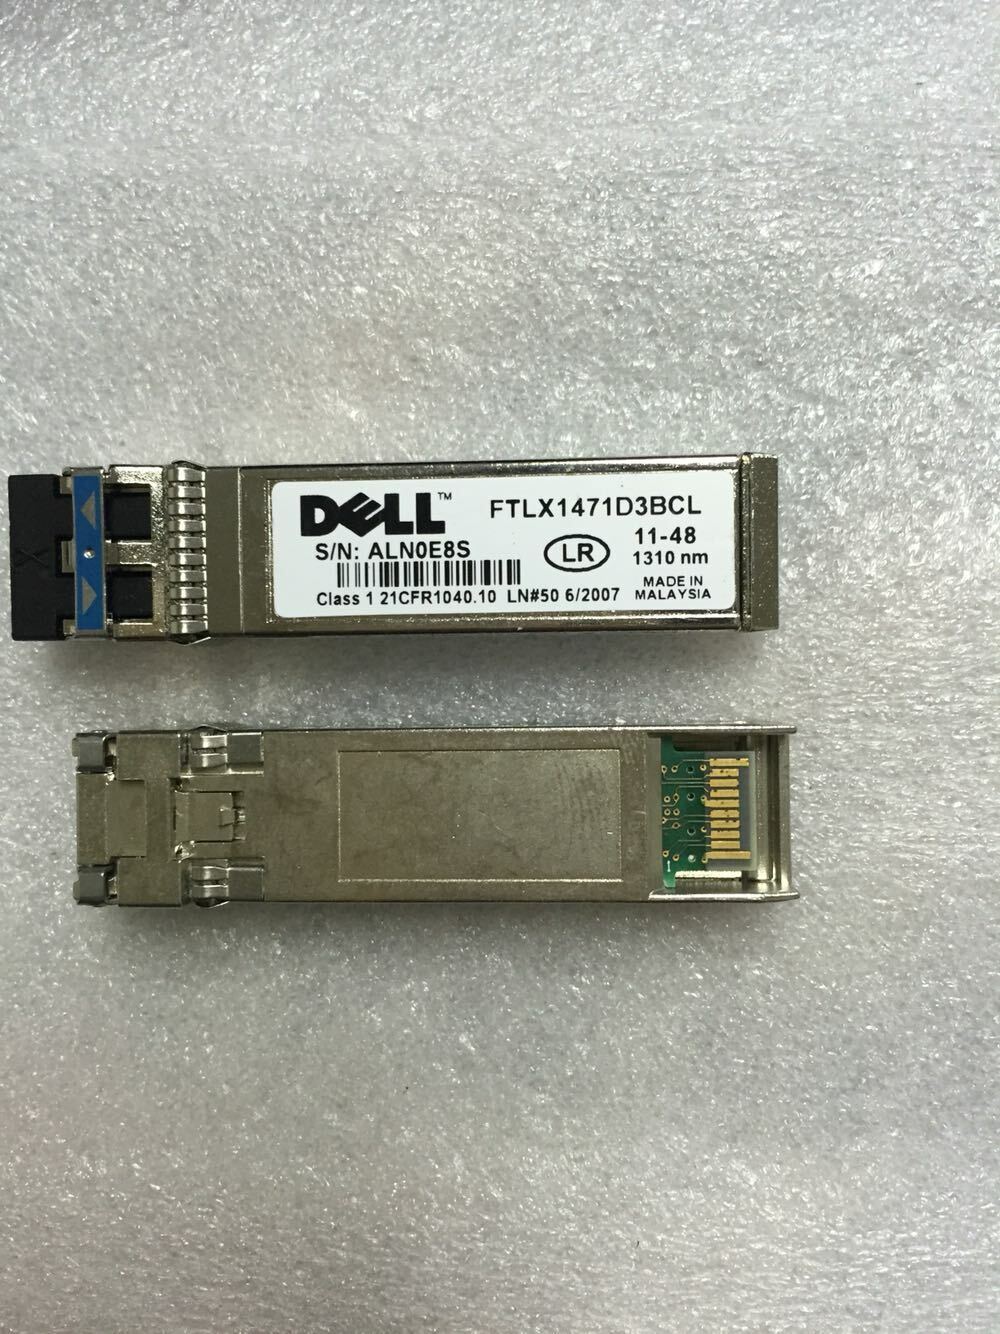 Dell RN84N FTLX1471D3BCL-FC 10Gb LR 1310NM 10KM SFP+ Transceiver